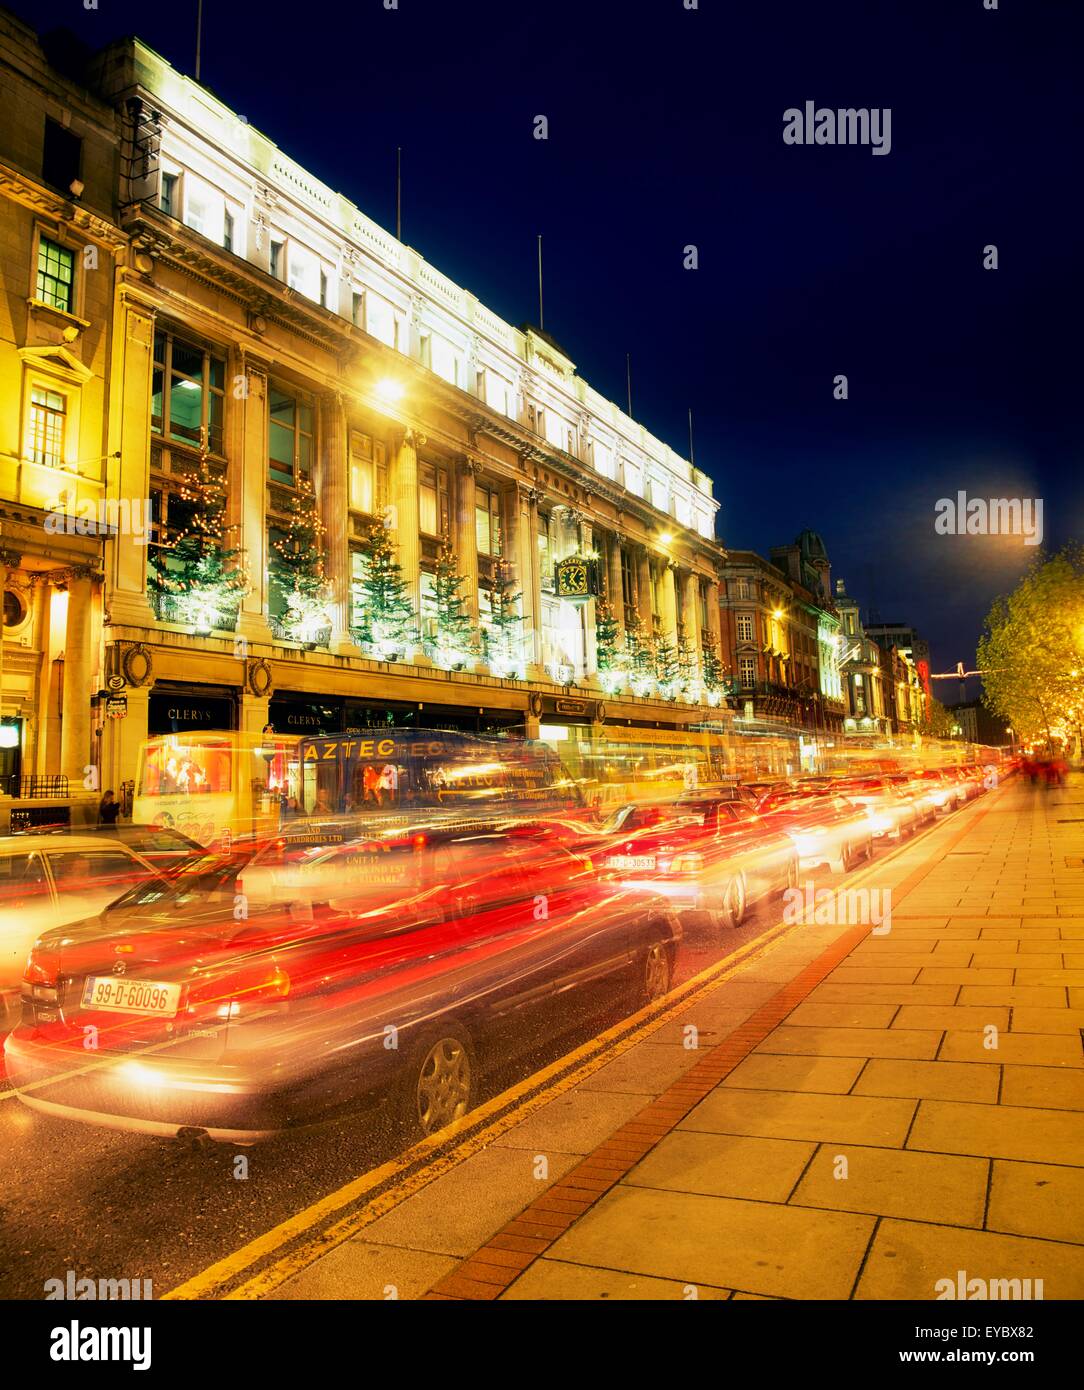 Weihnachten Straßenszenen, Clery Shop, O' Connell Street, Dublin, Irland. Stockfoto